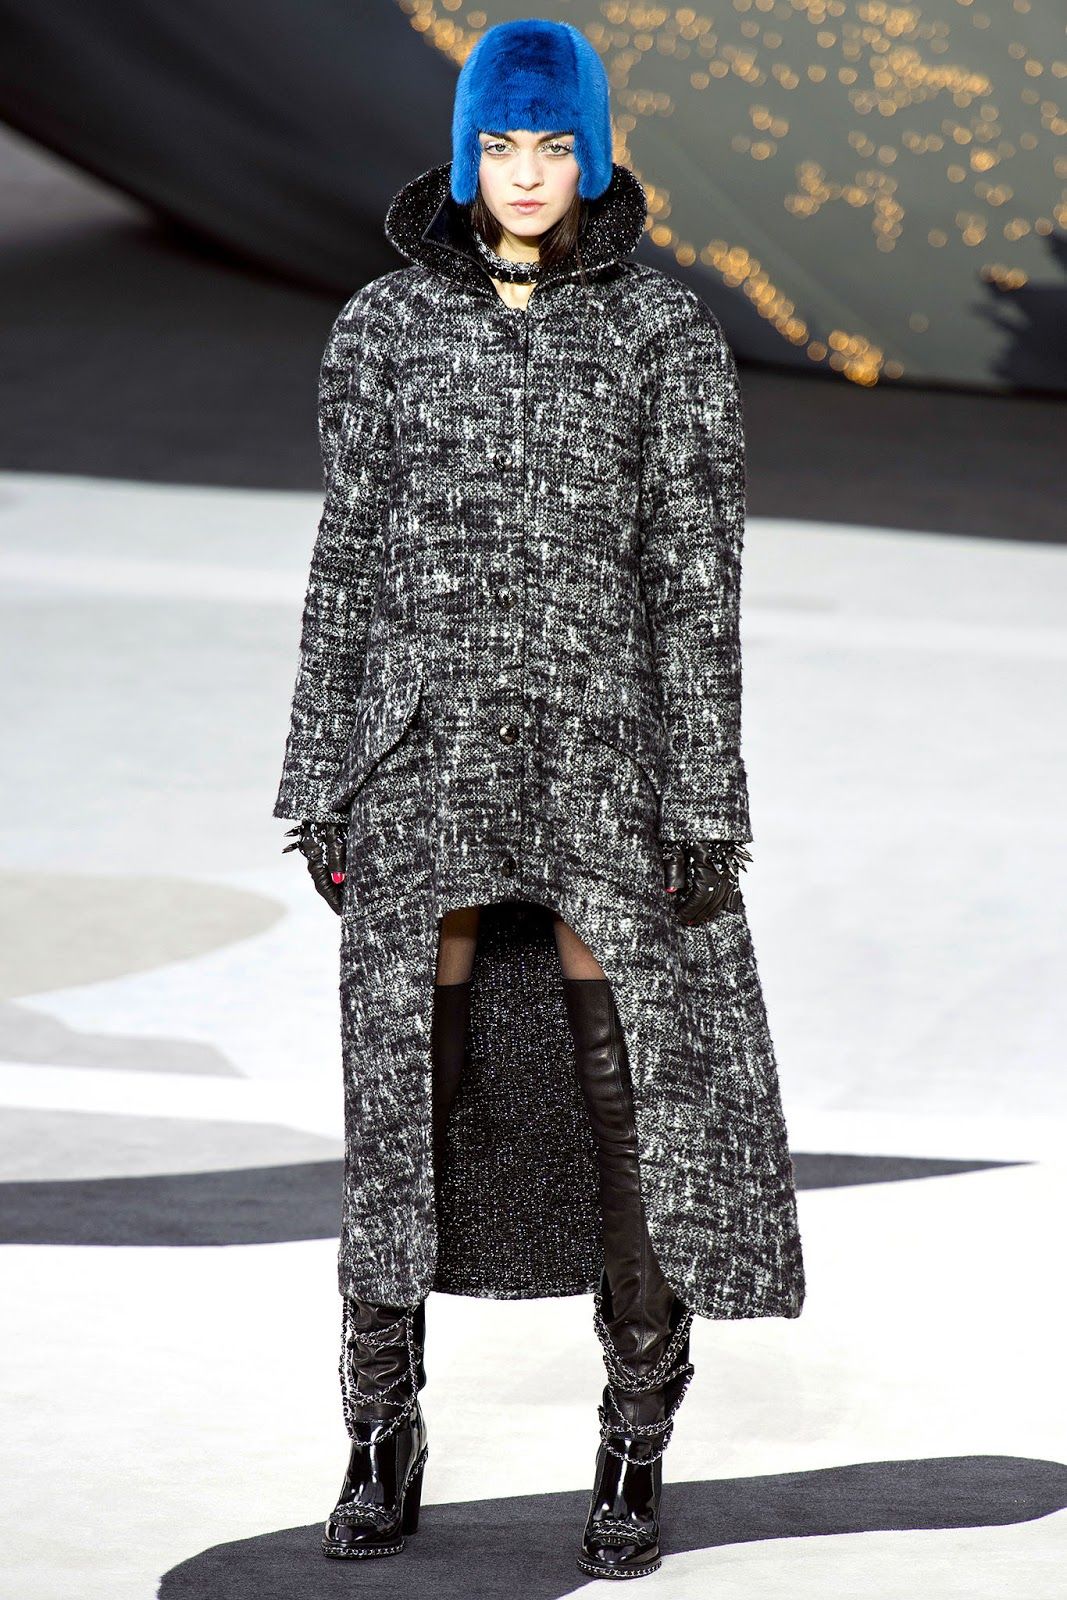 Chanel Fall/Winter 2013 collection – Paris fashion week | Fab Fashion Fix